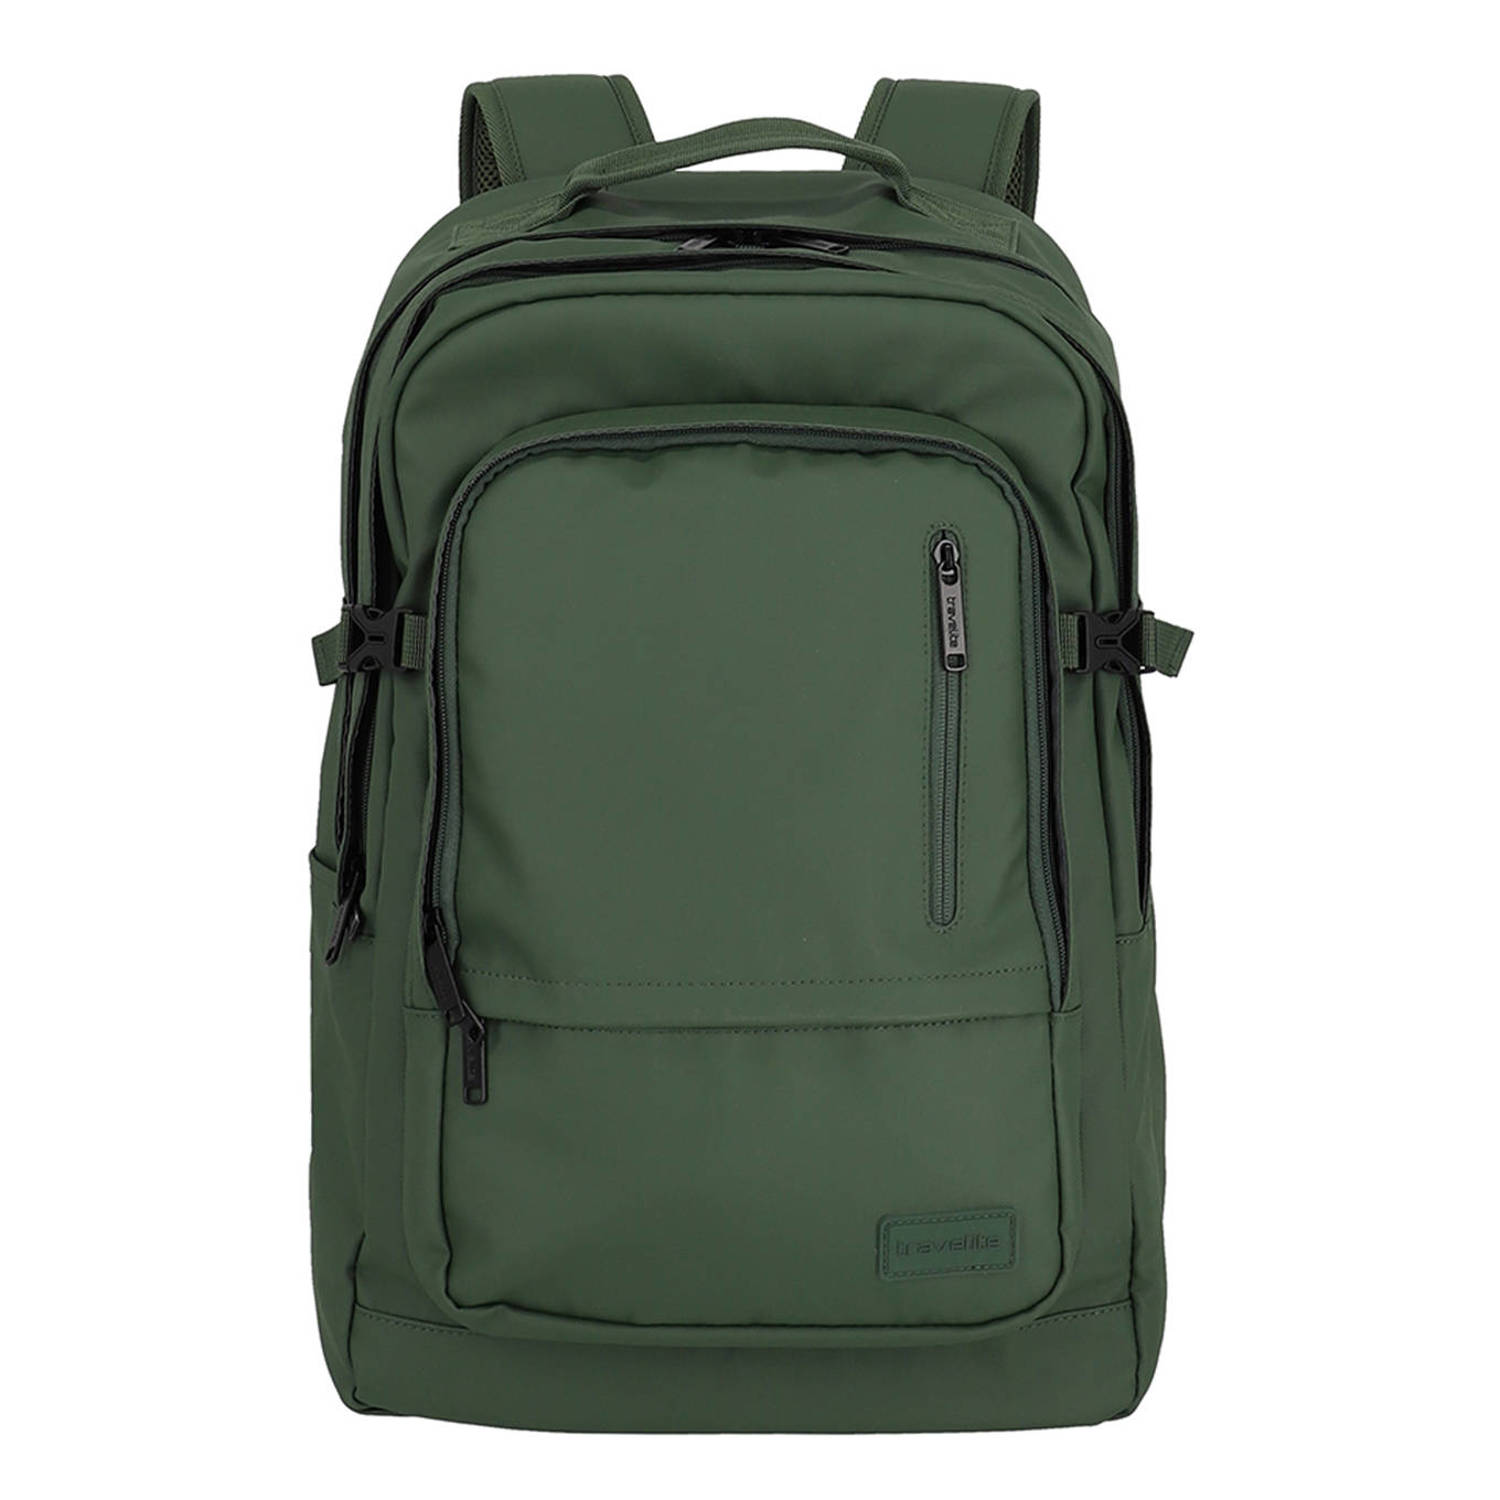 Travelite rugzak Basics Backpack kaki